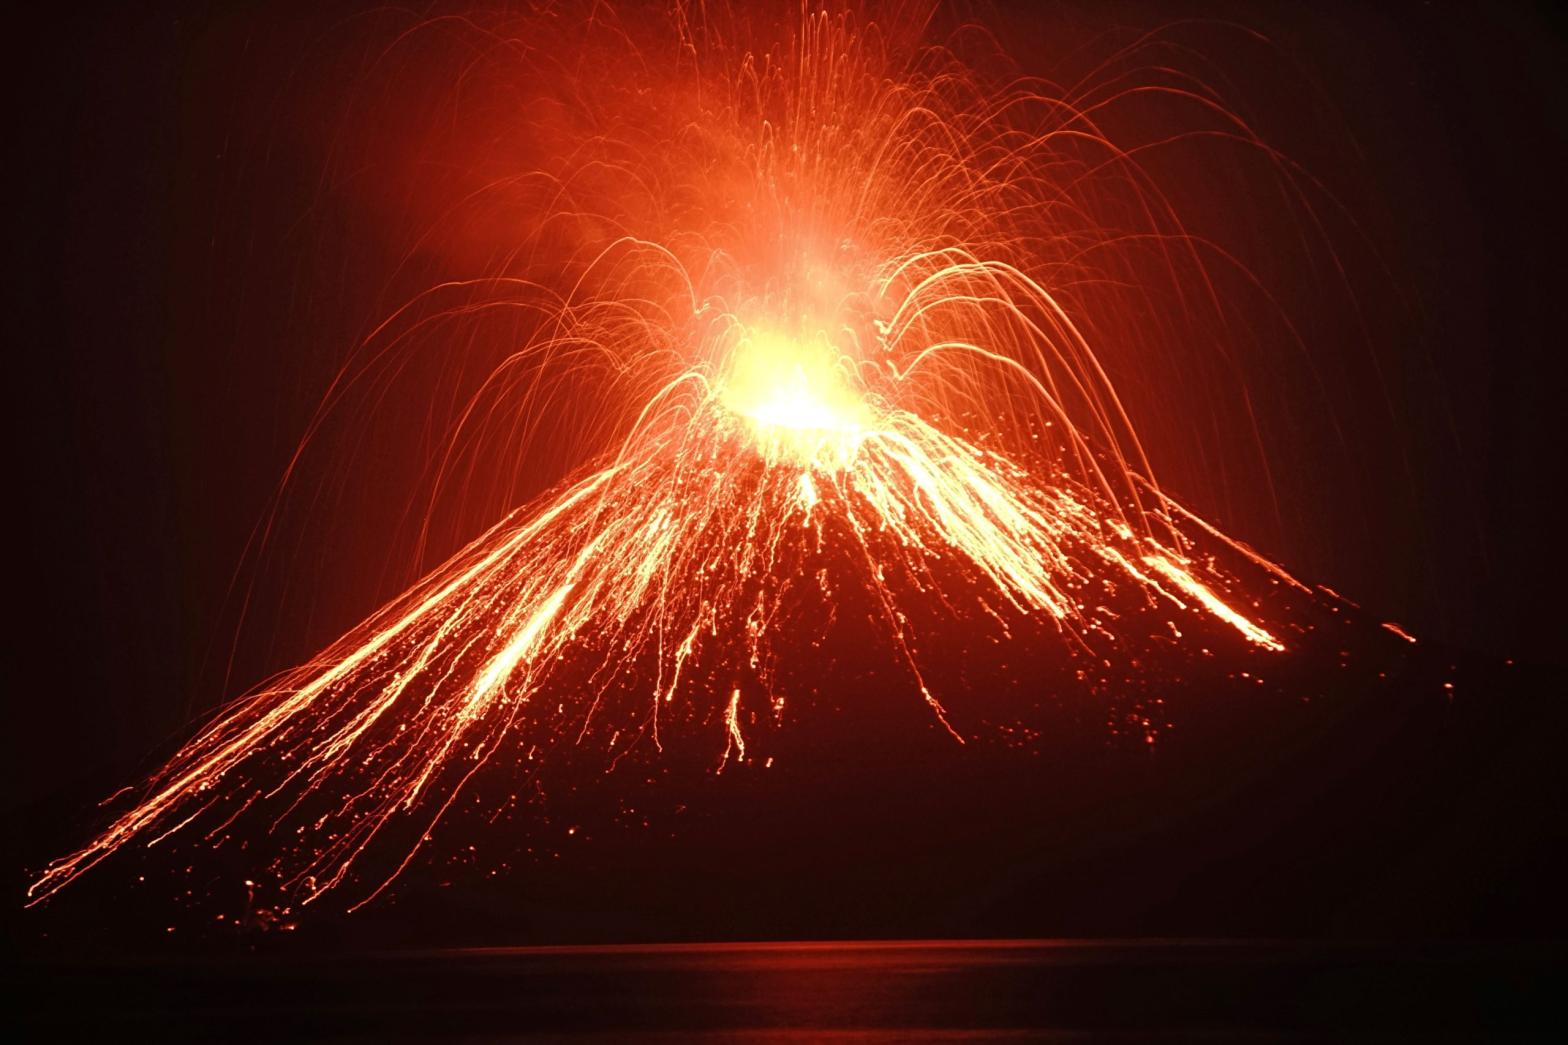 Anak Krakatau, near what is now Toba Lake, erupting in 2018. (Photo: FERDI AWED/AFP via Getty Images, Getty Images)